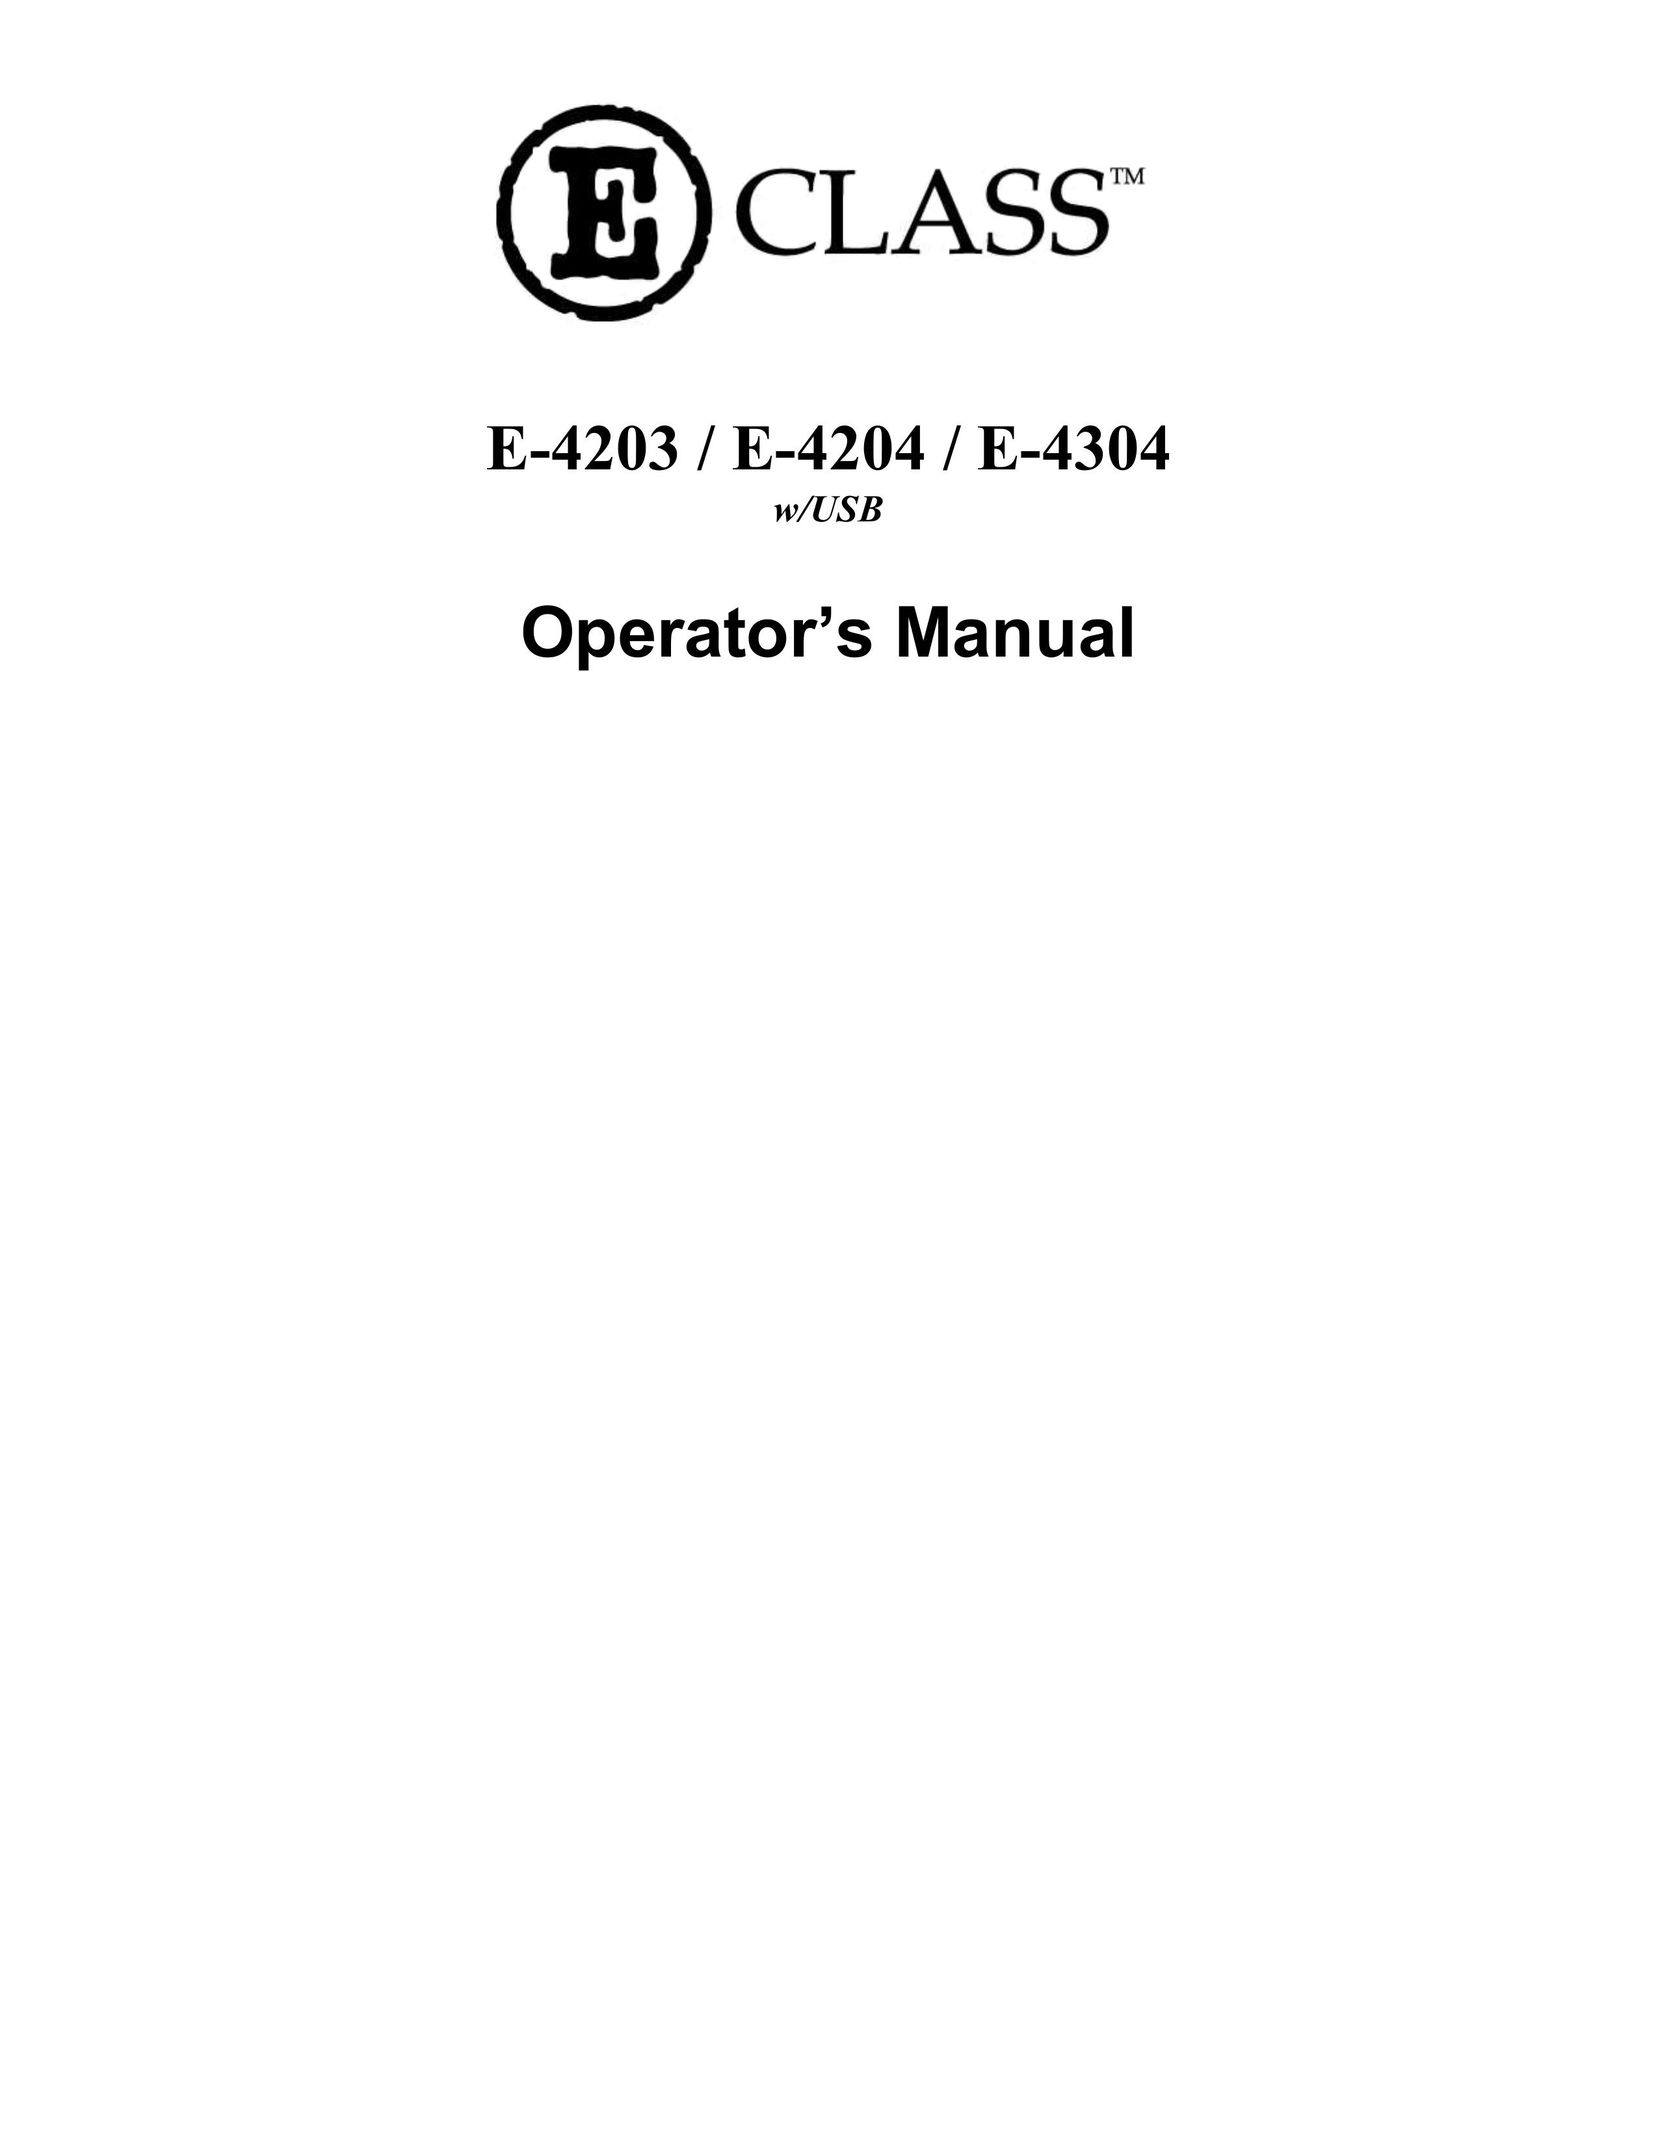 Datamax E-4304e Printer User Manual